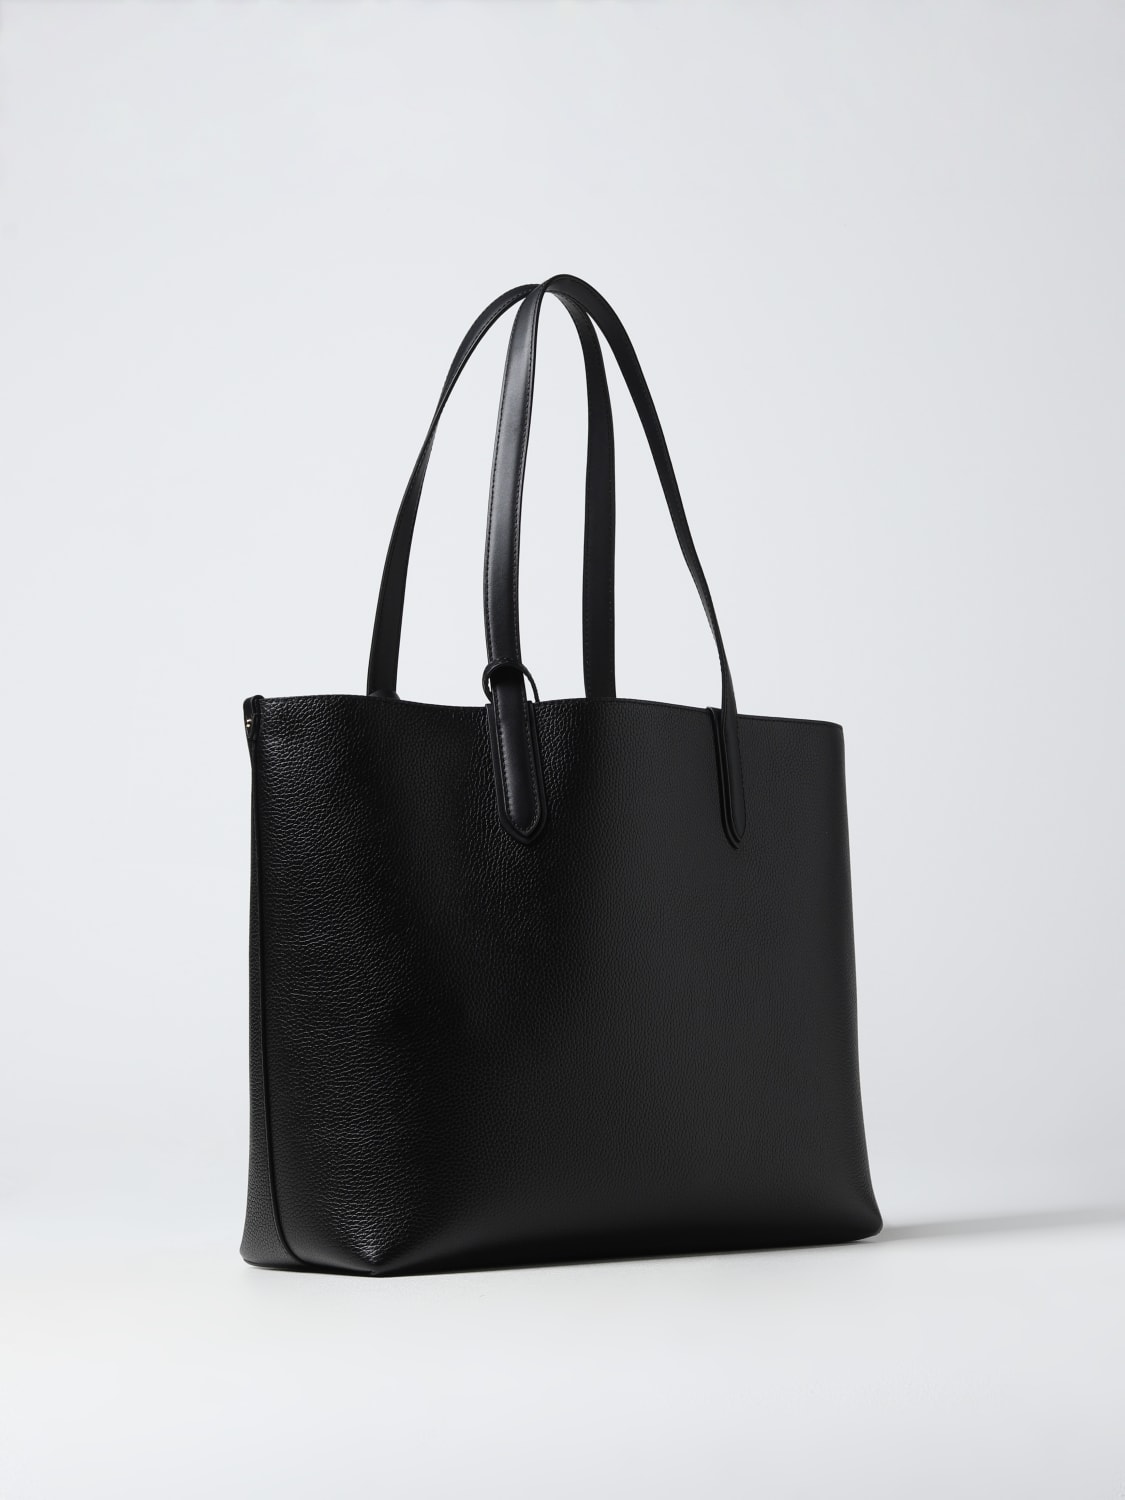 Michael Kors Women's Bag